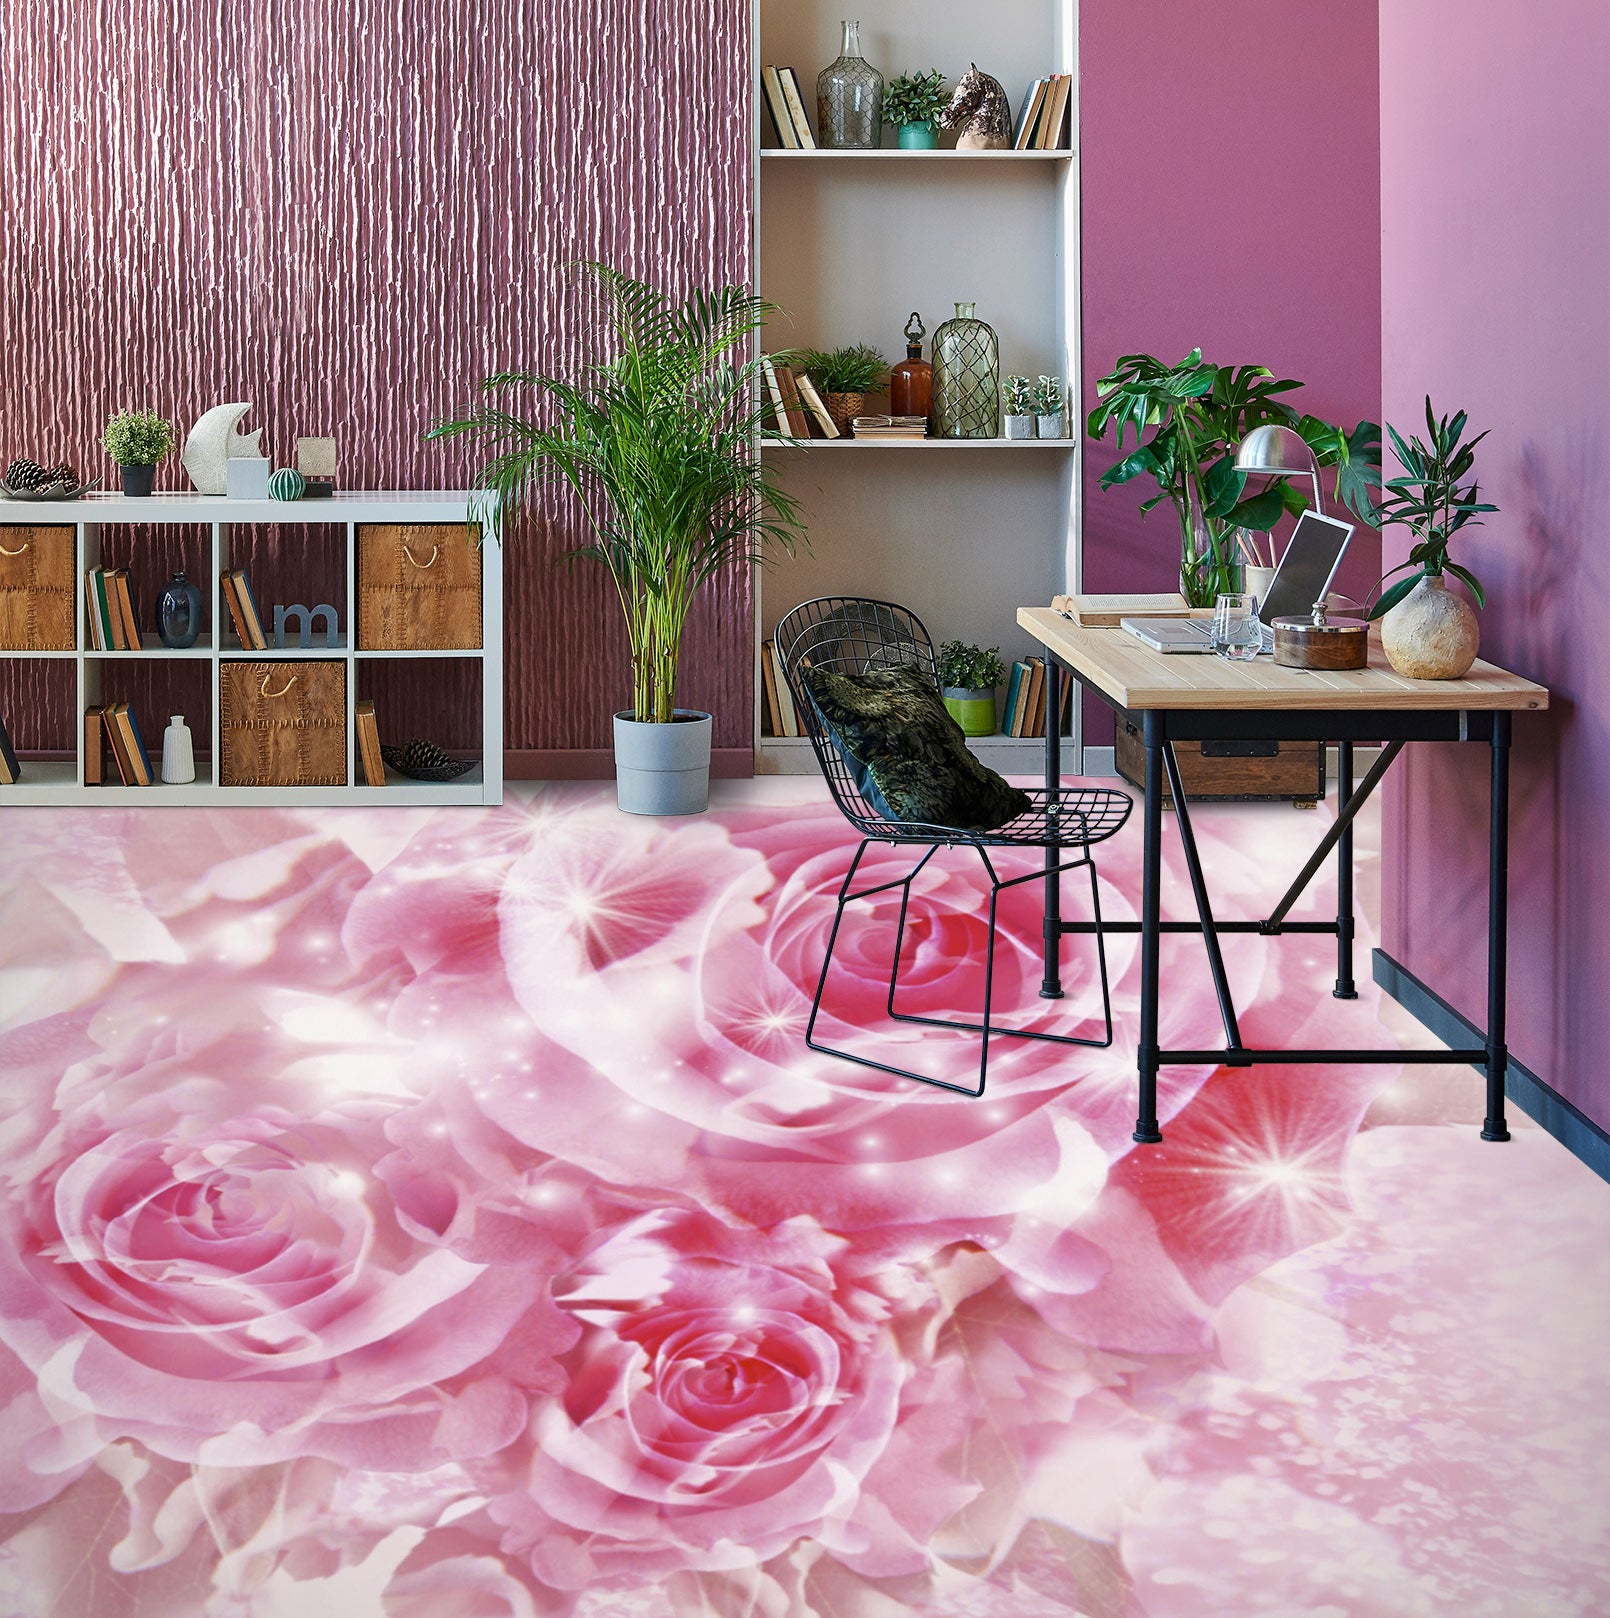 3D Dreamy Pink Roses 1362 Floor Mural  Wallpaper Murals Self-Adhesive Removable Print Epoxy